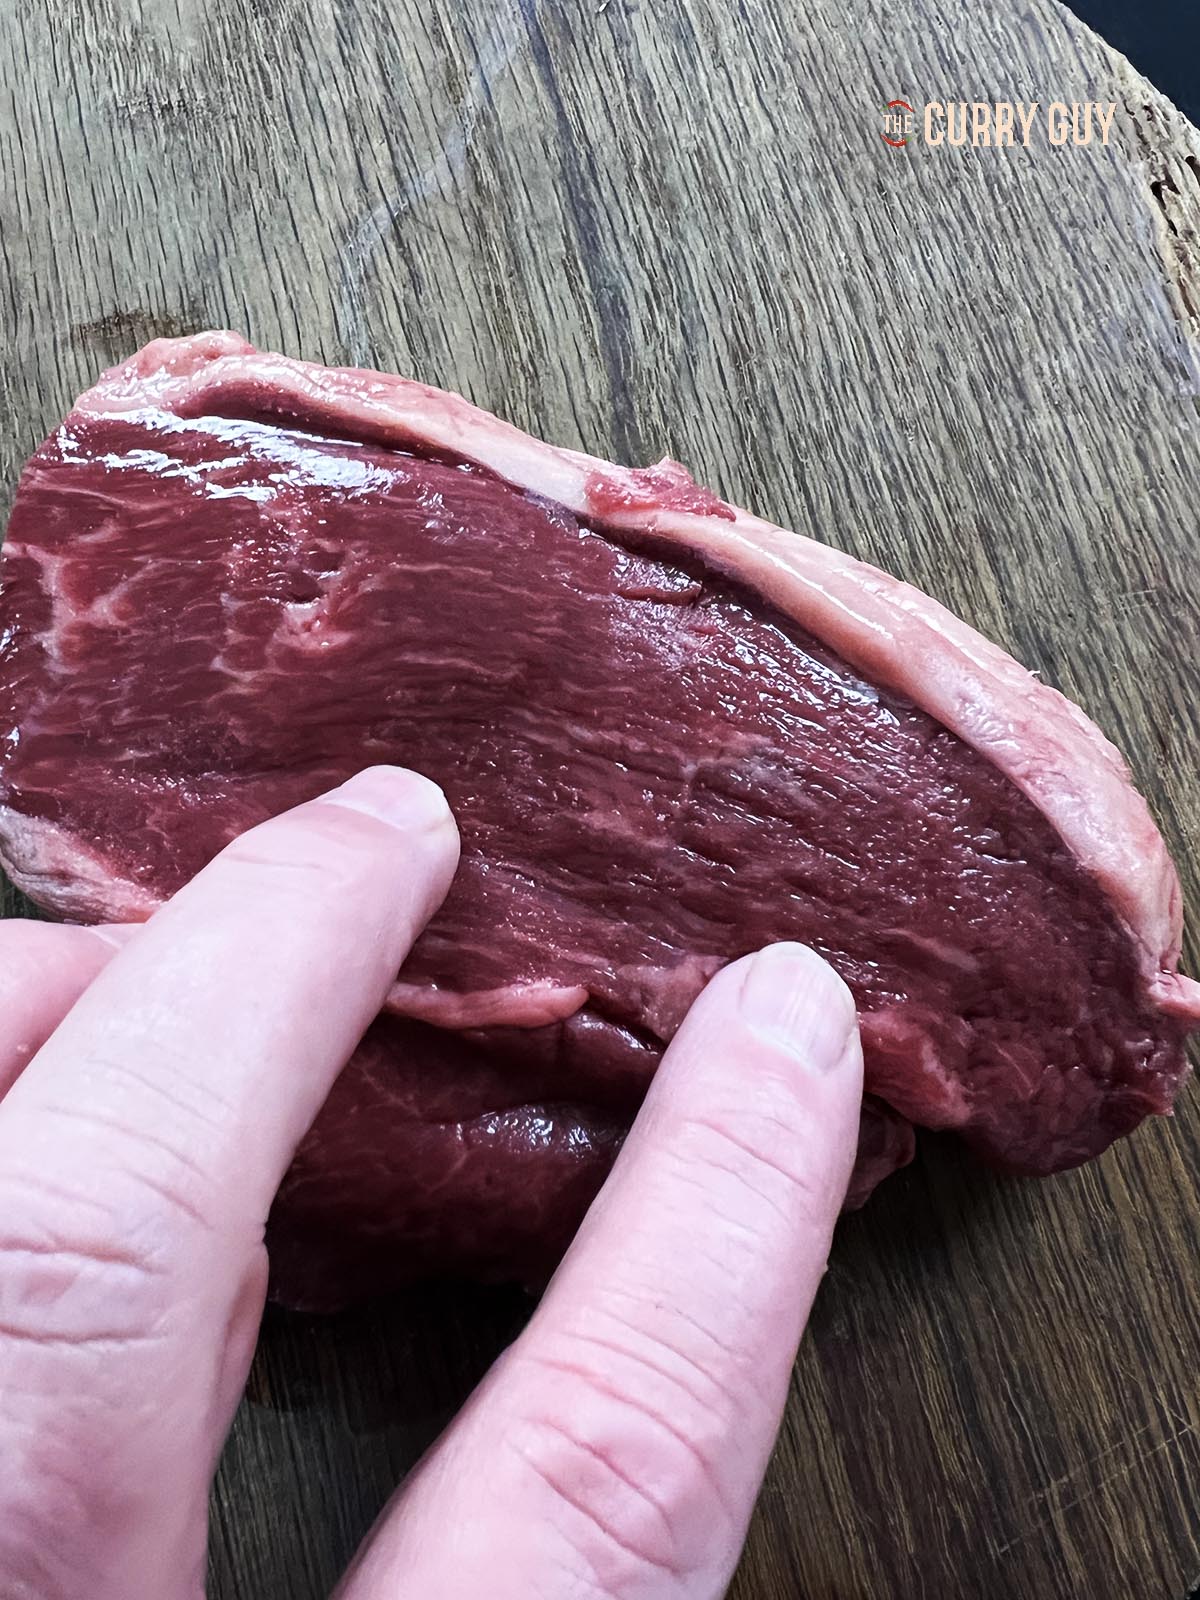 A photo showing the grain in a beef rump steak.